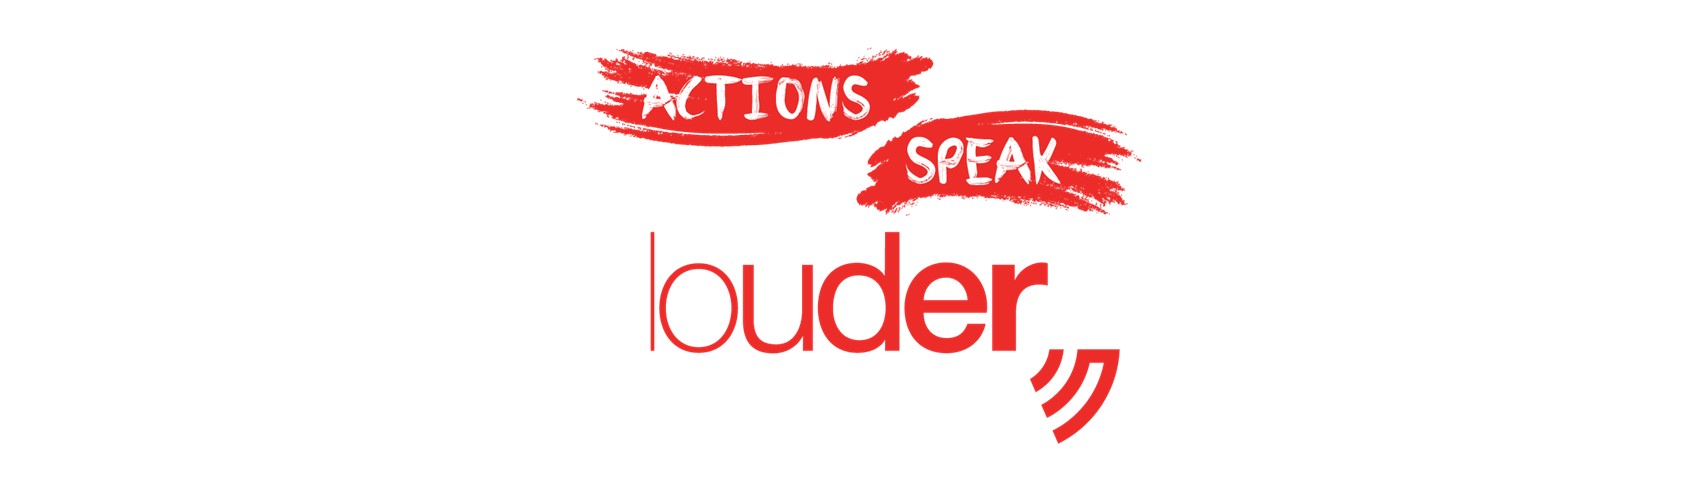 turundusagentuur Louder - actions speak loduer